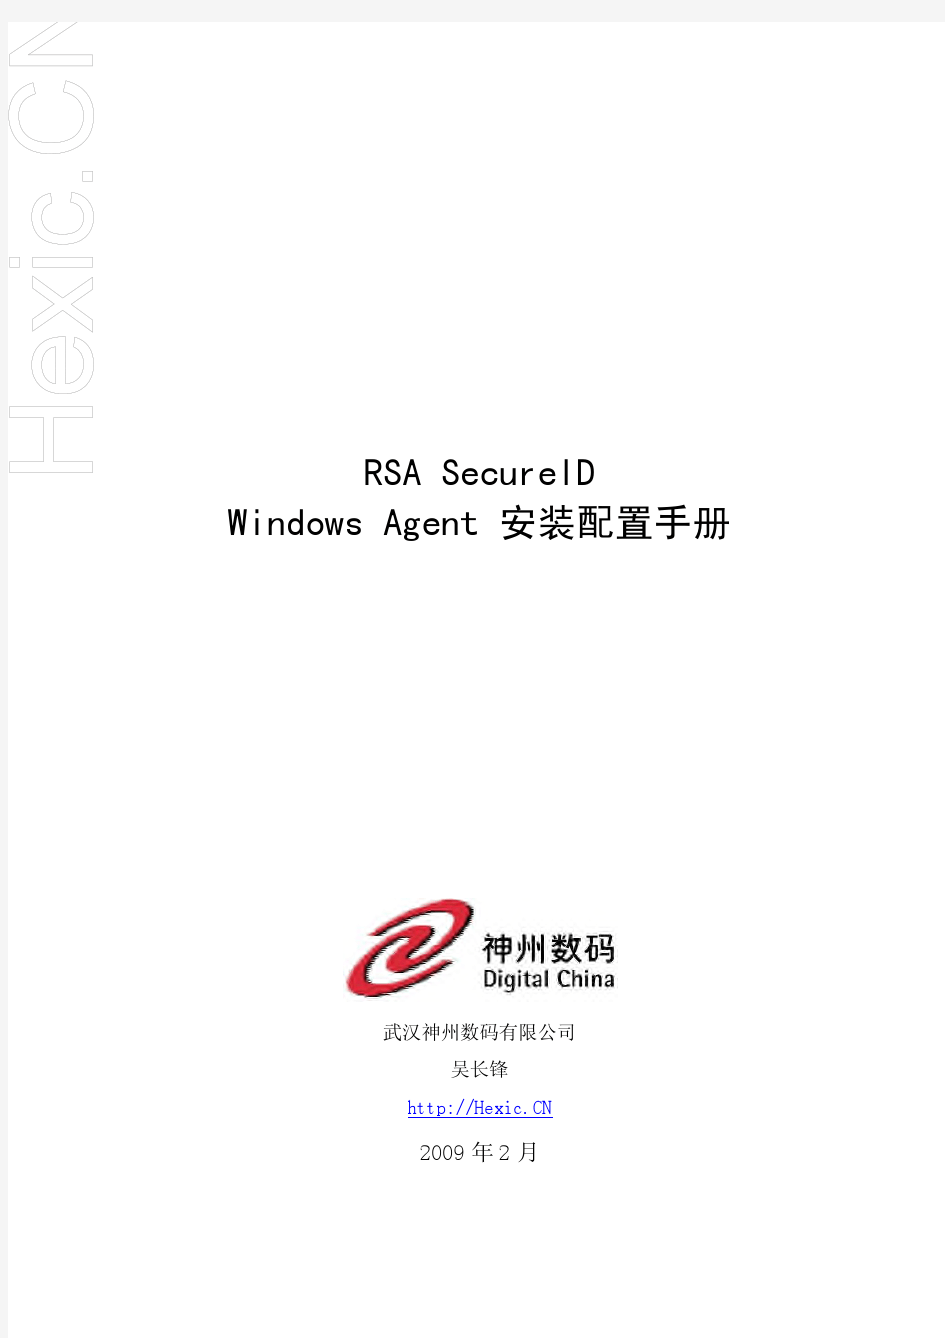 rsa-securid-windows-agent